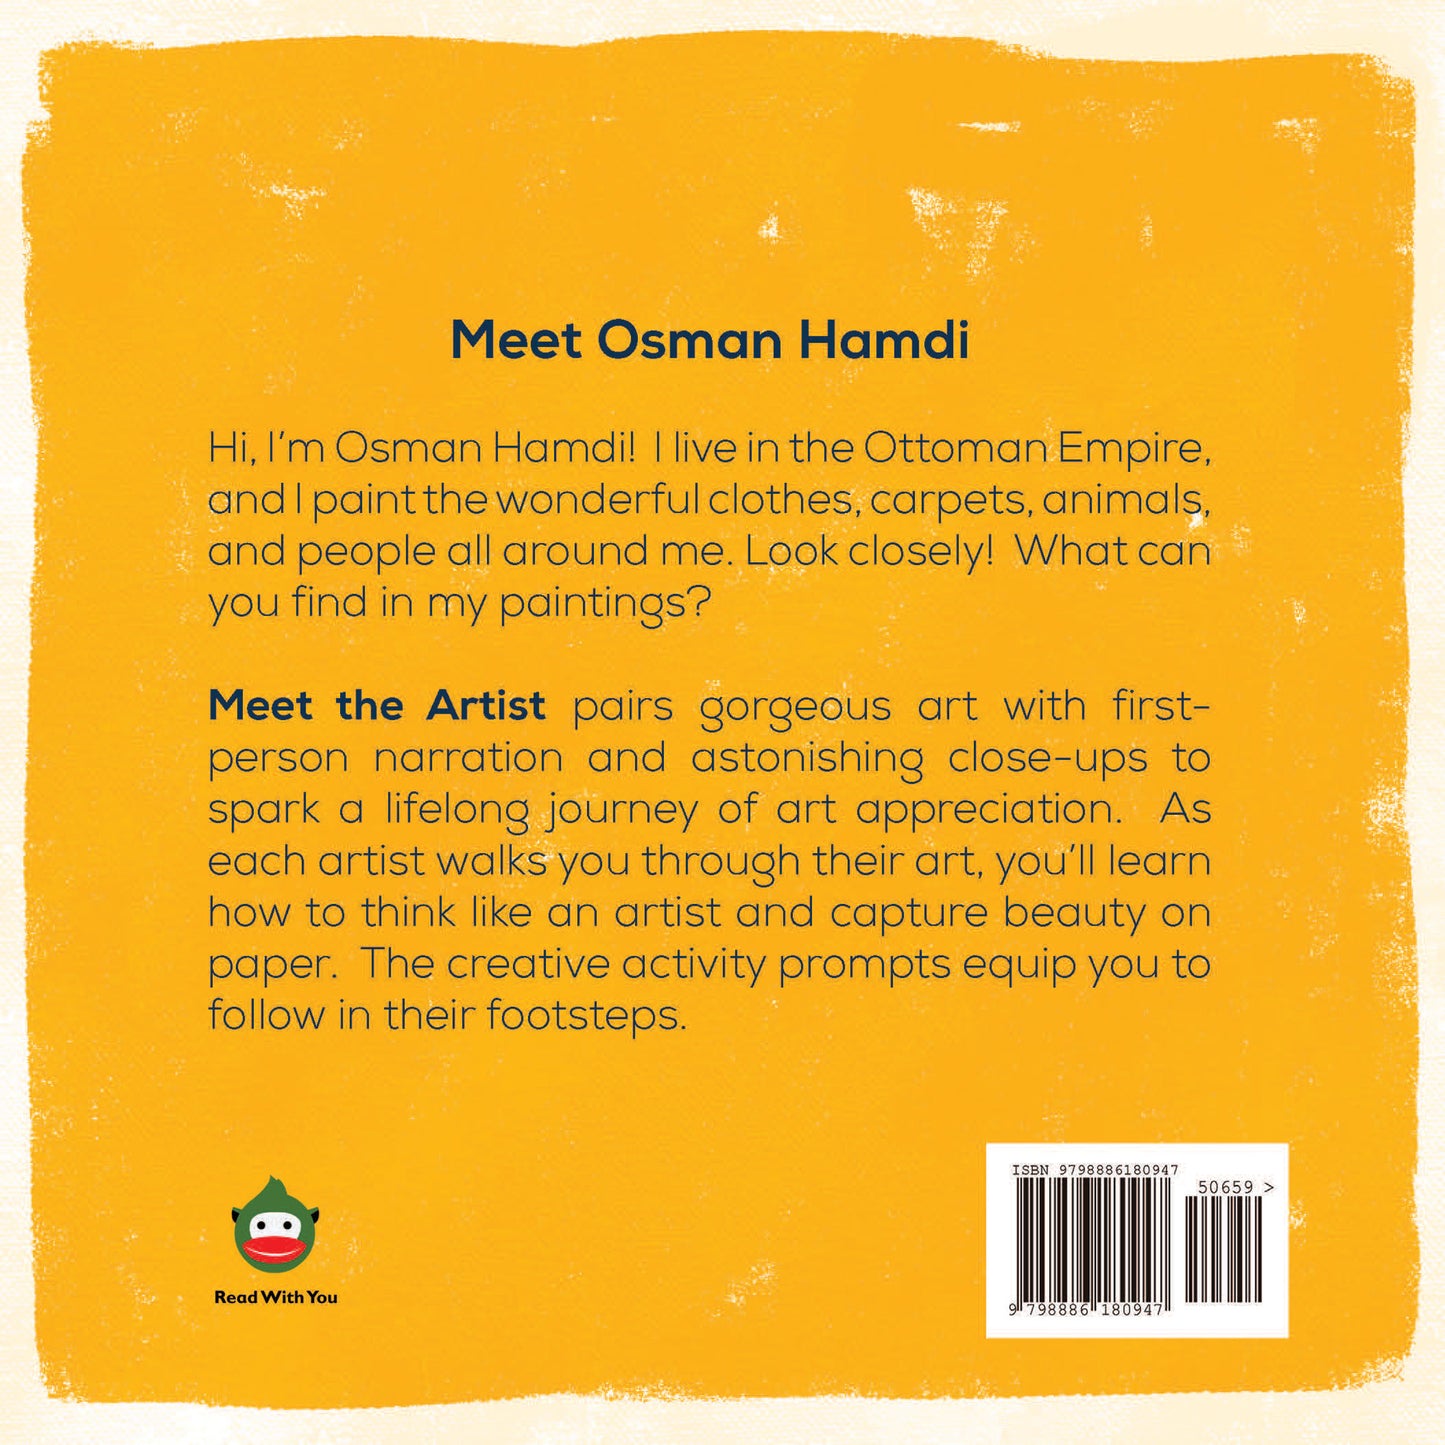 Meet Osman Hamdi